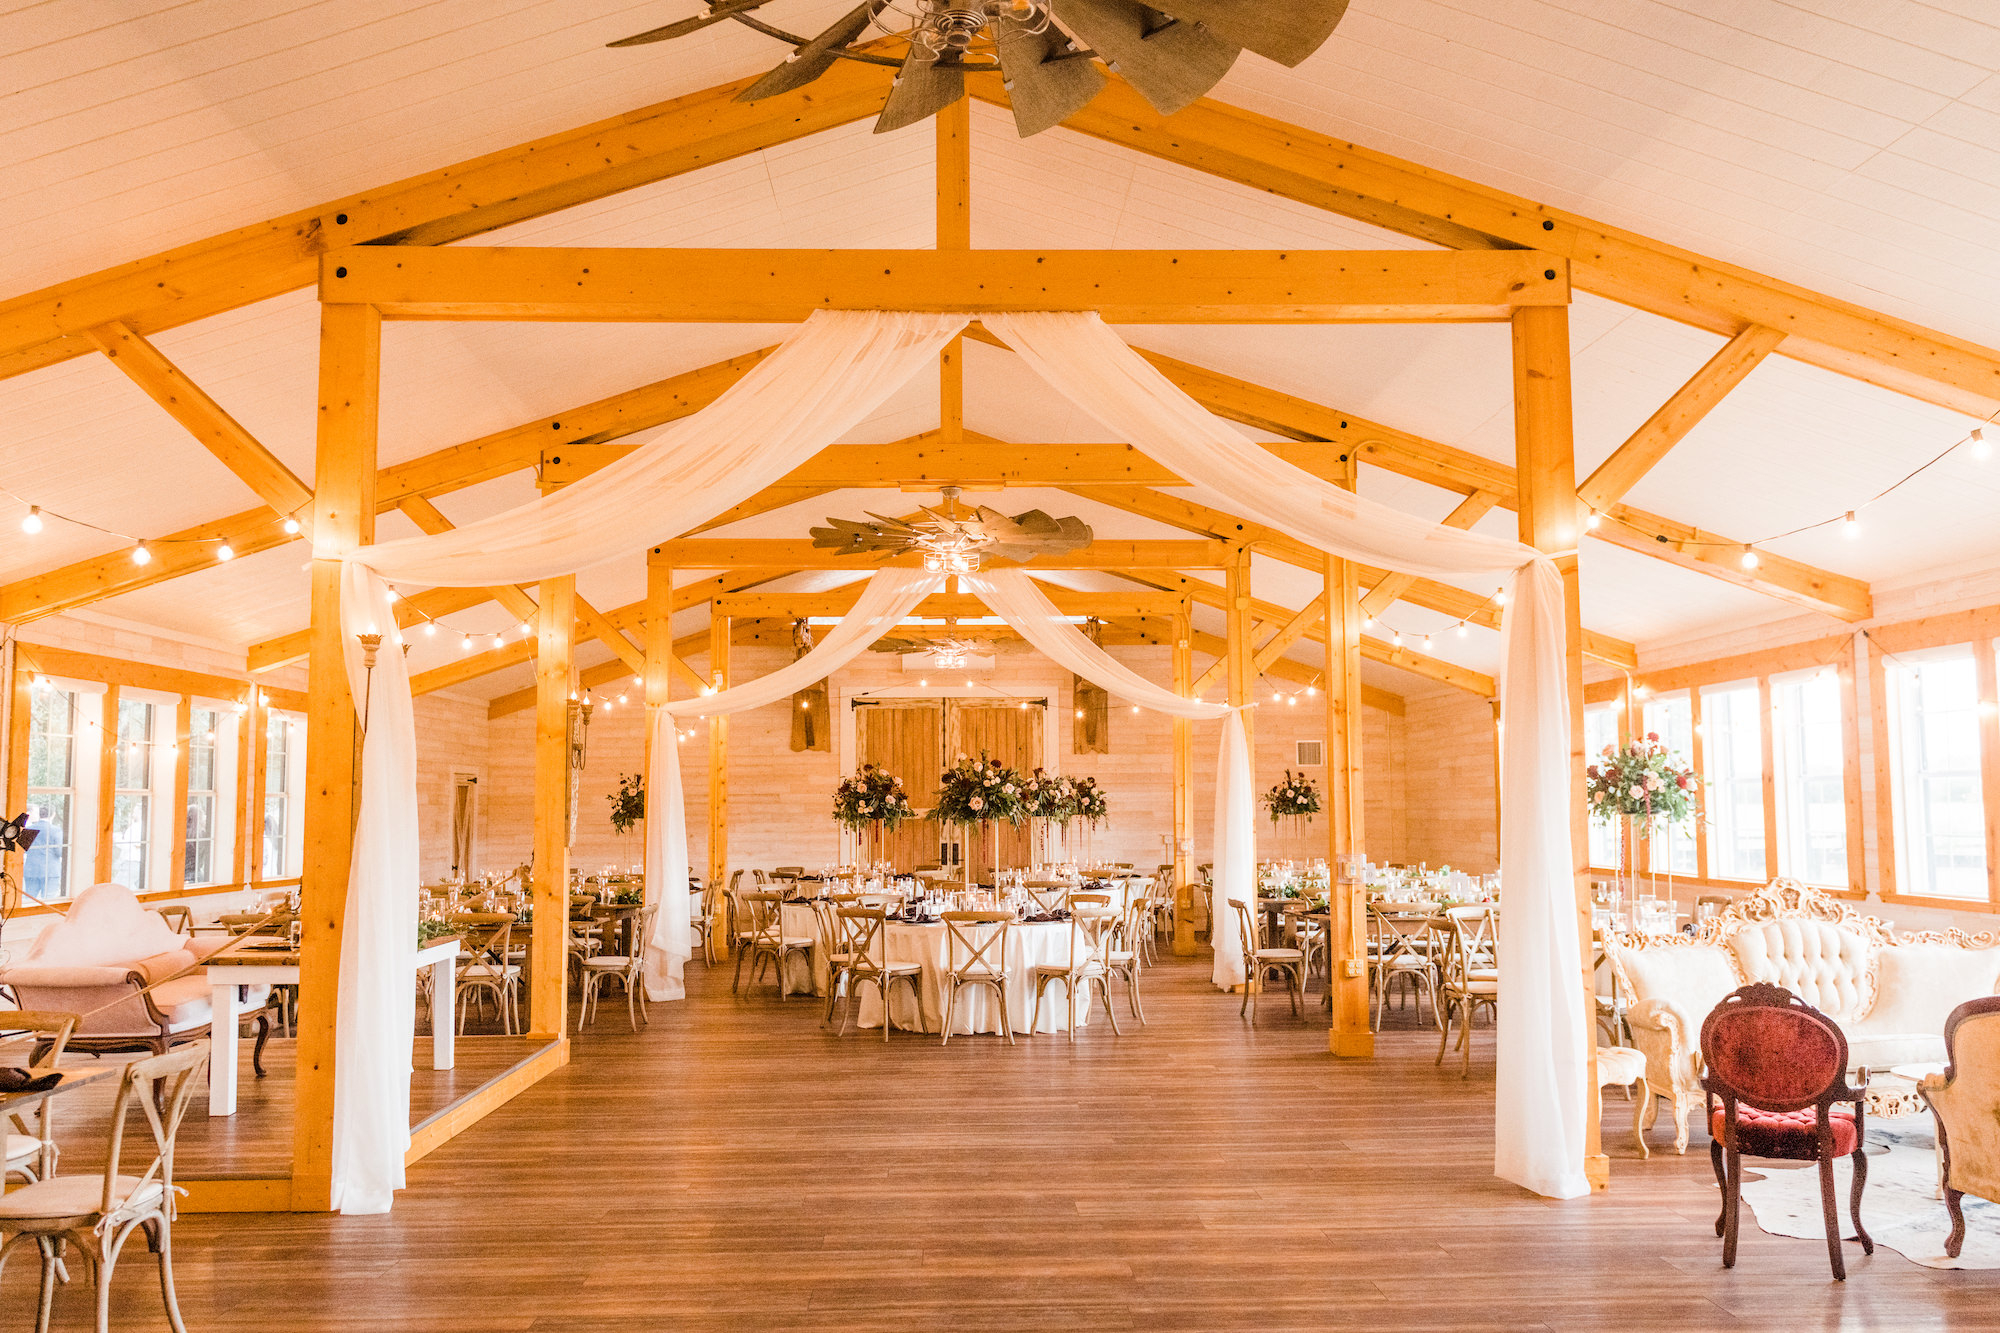 White Drapery | Indoor Rustic Wedding Reception Inspiration | Tampa Bay Venue Legacy Lane Weddings